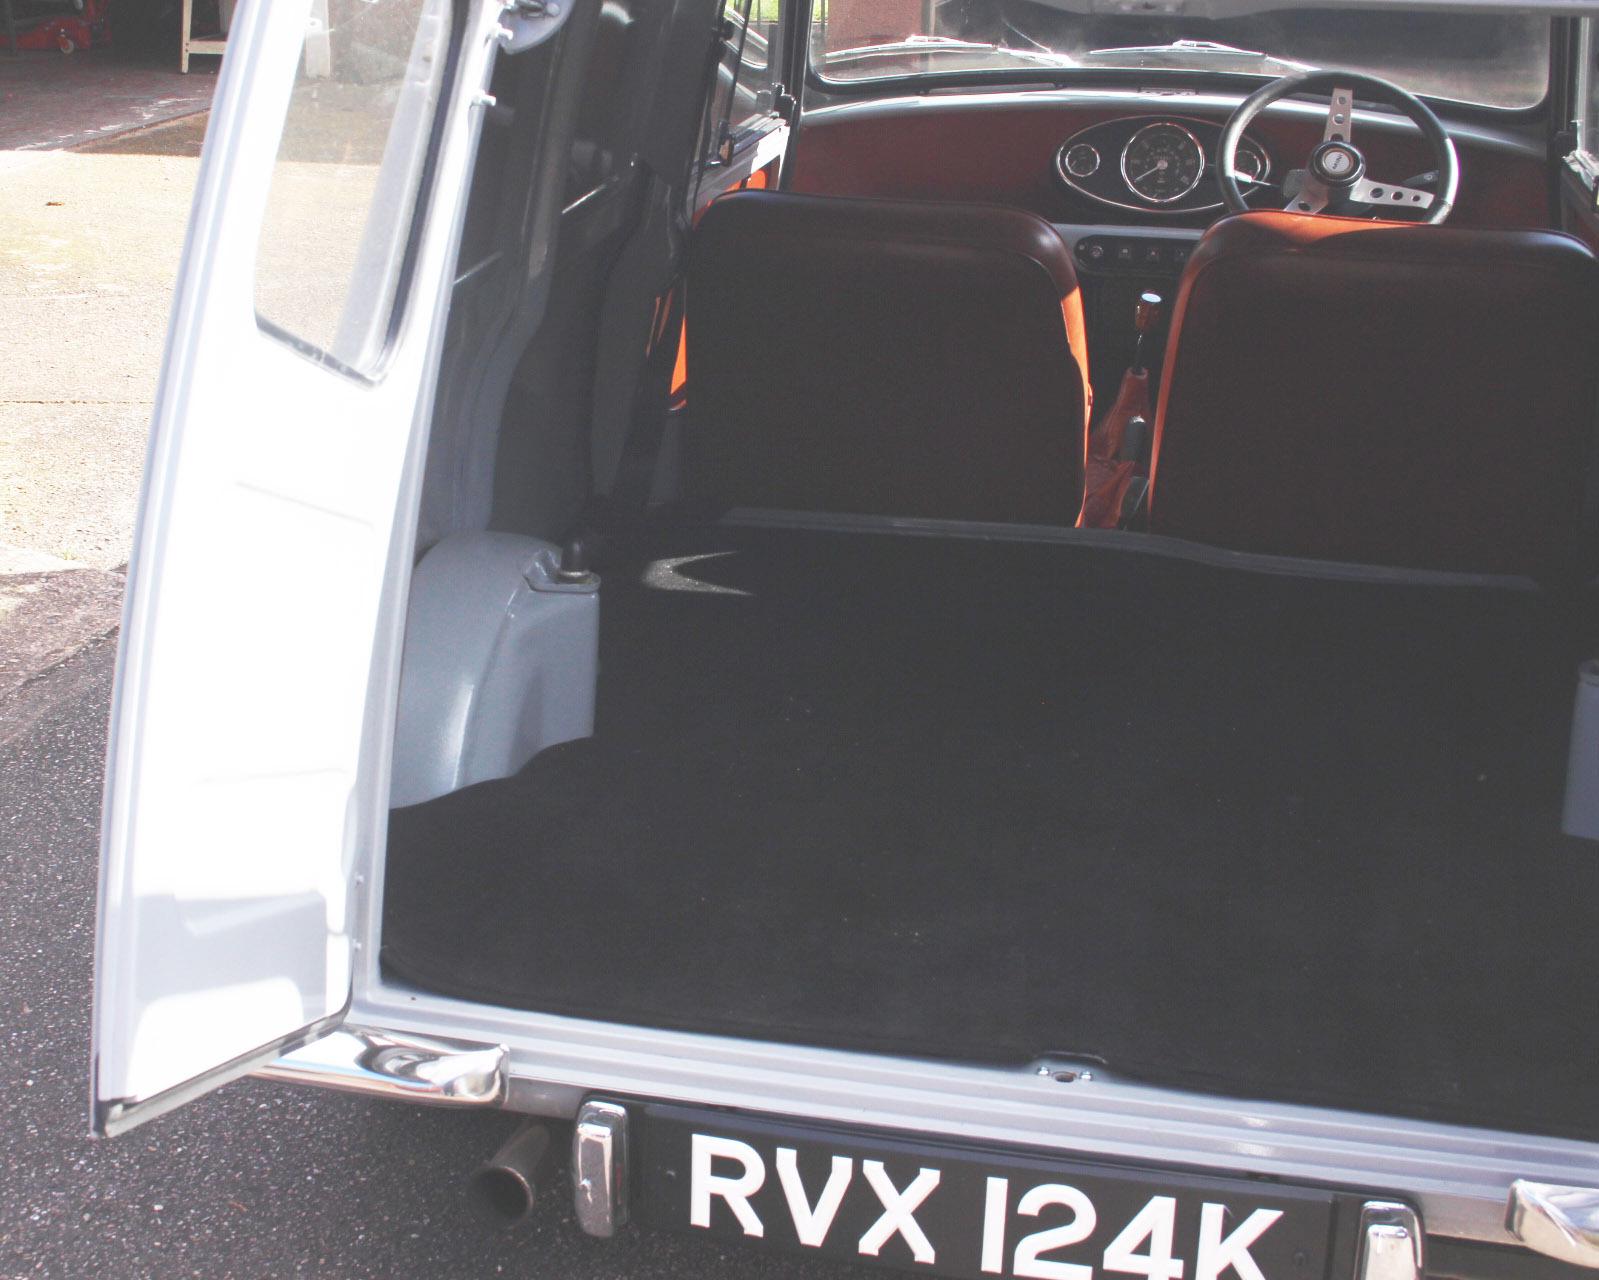 1972 Leyland Mini Van 1000 Make: Leyland Model: Mini Van 1000 Registration: RVX 124K Year: - Image 9 of 10